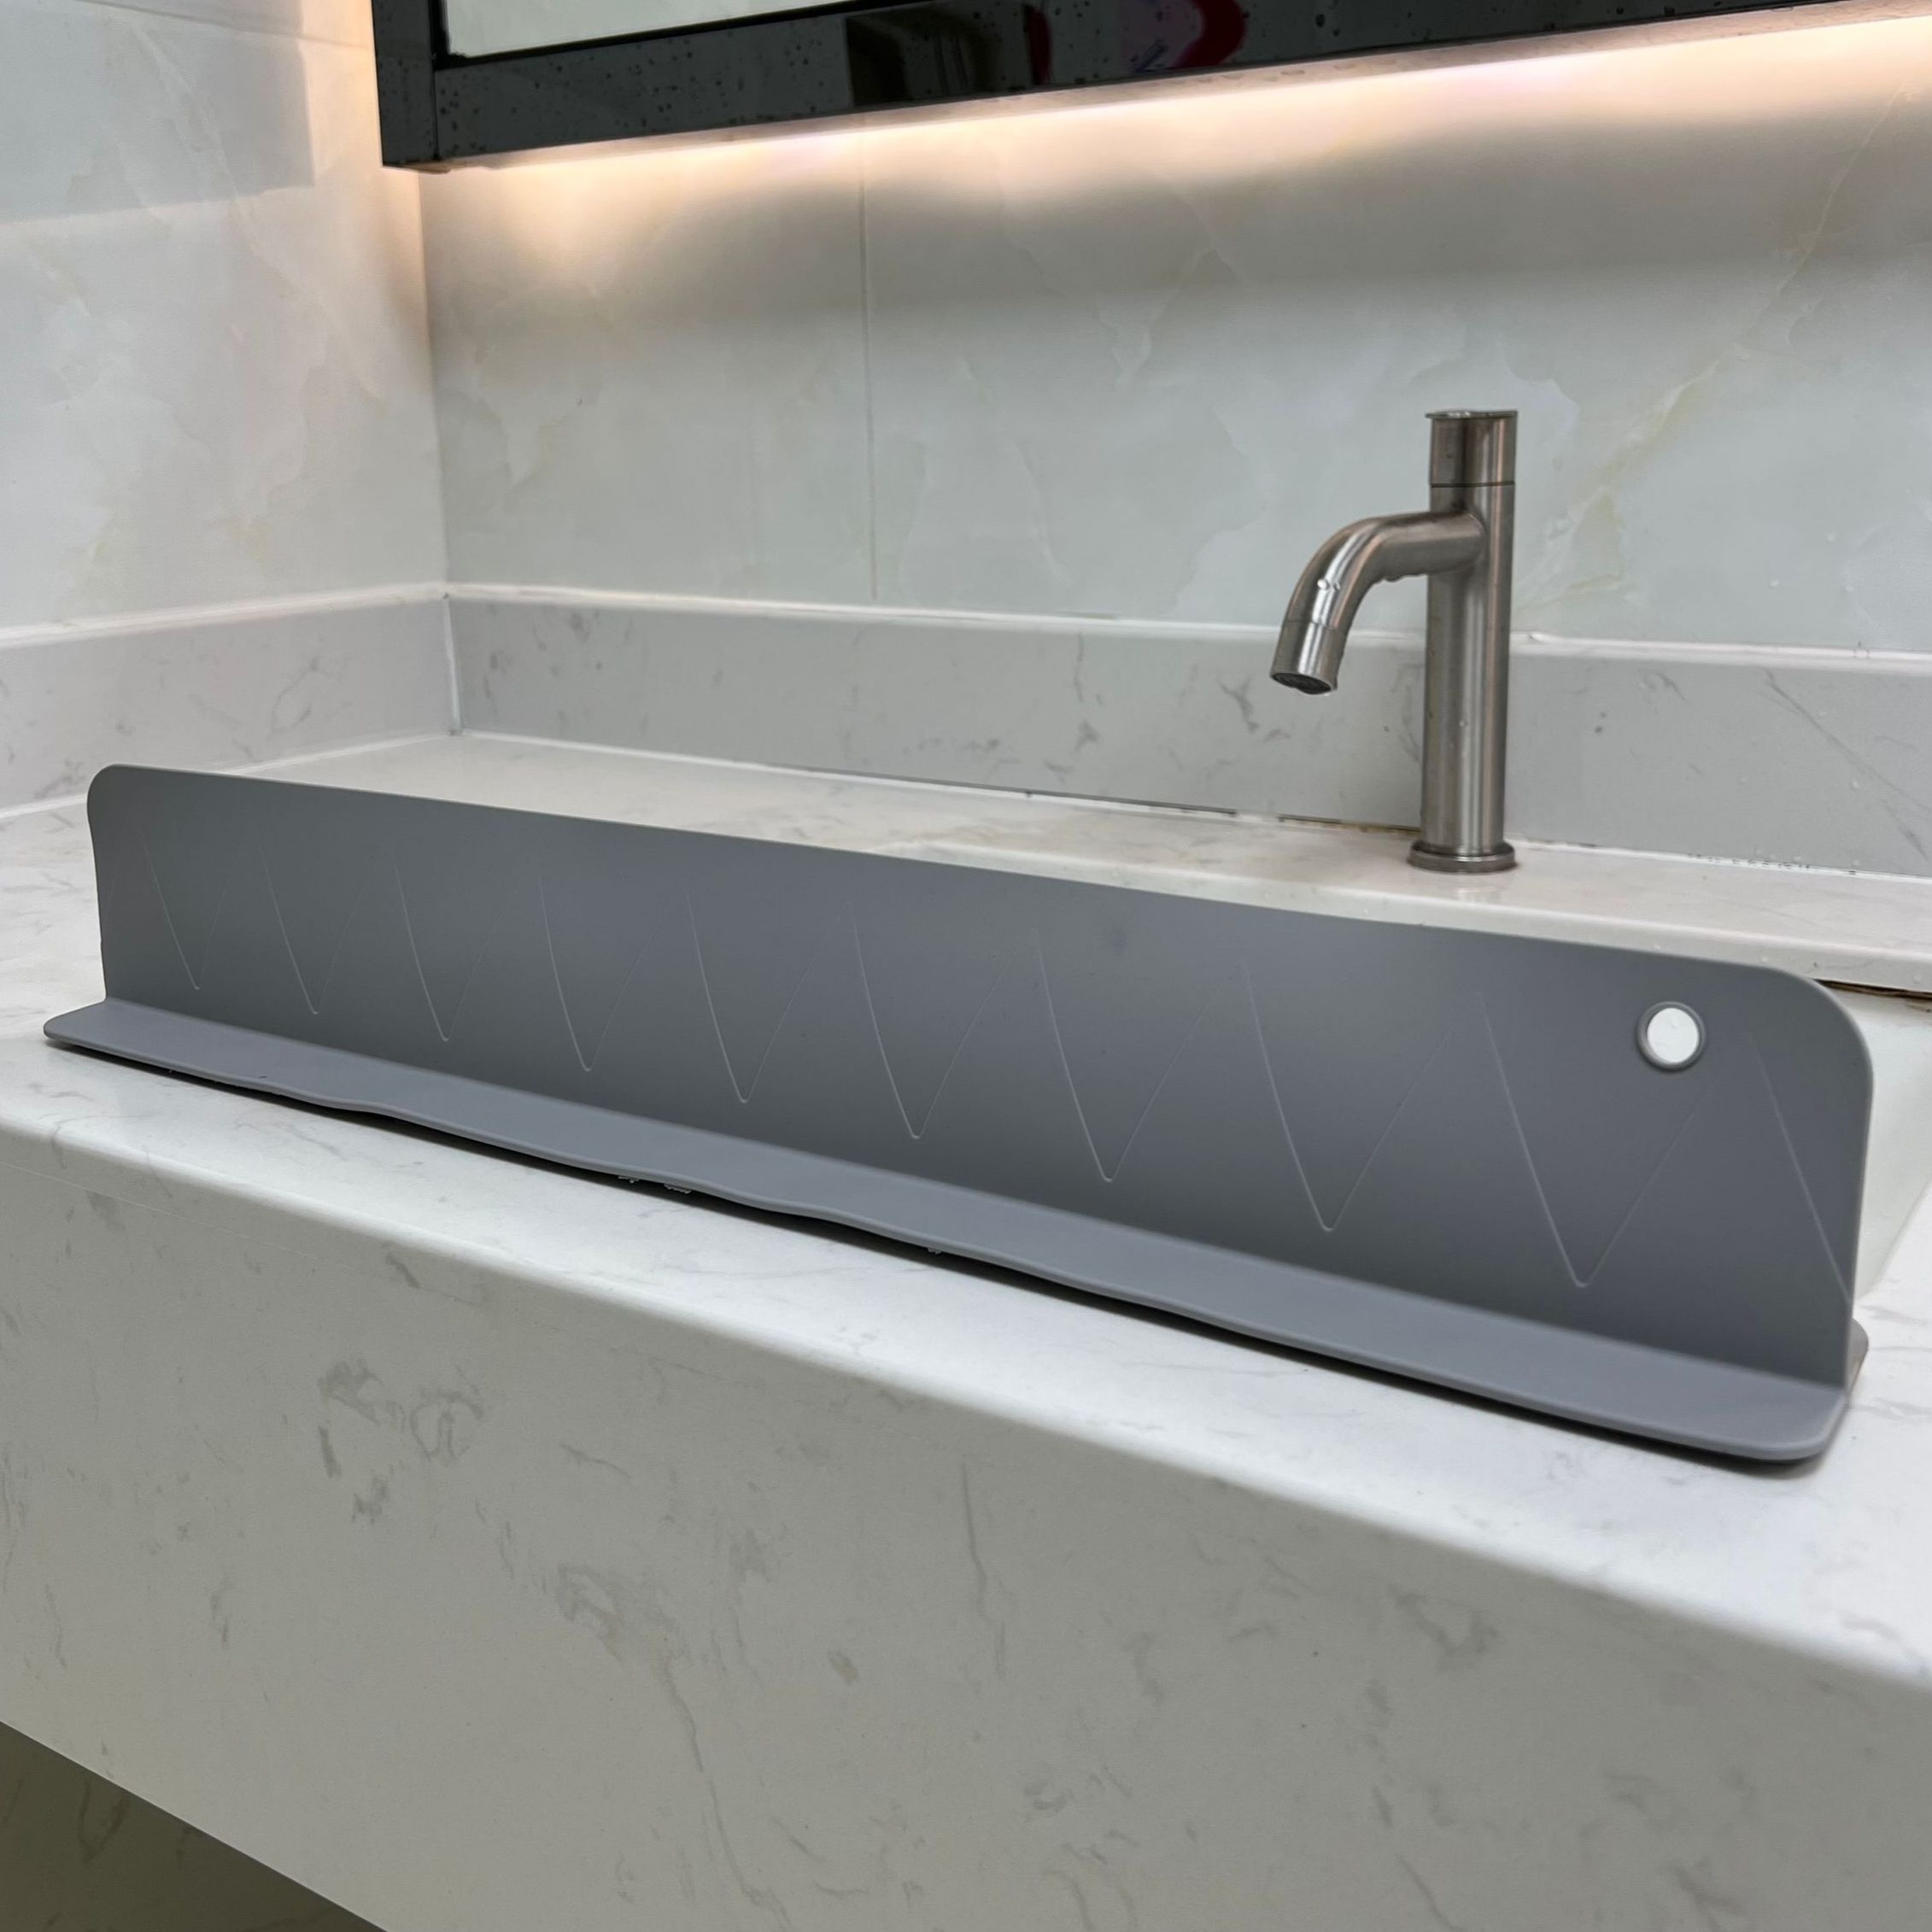 Bathroom Sink Splash Guard - Splashpad®